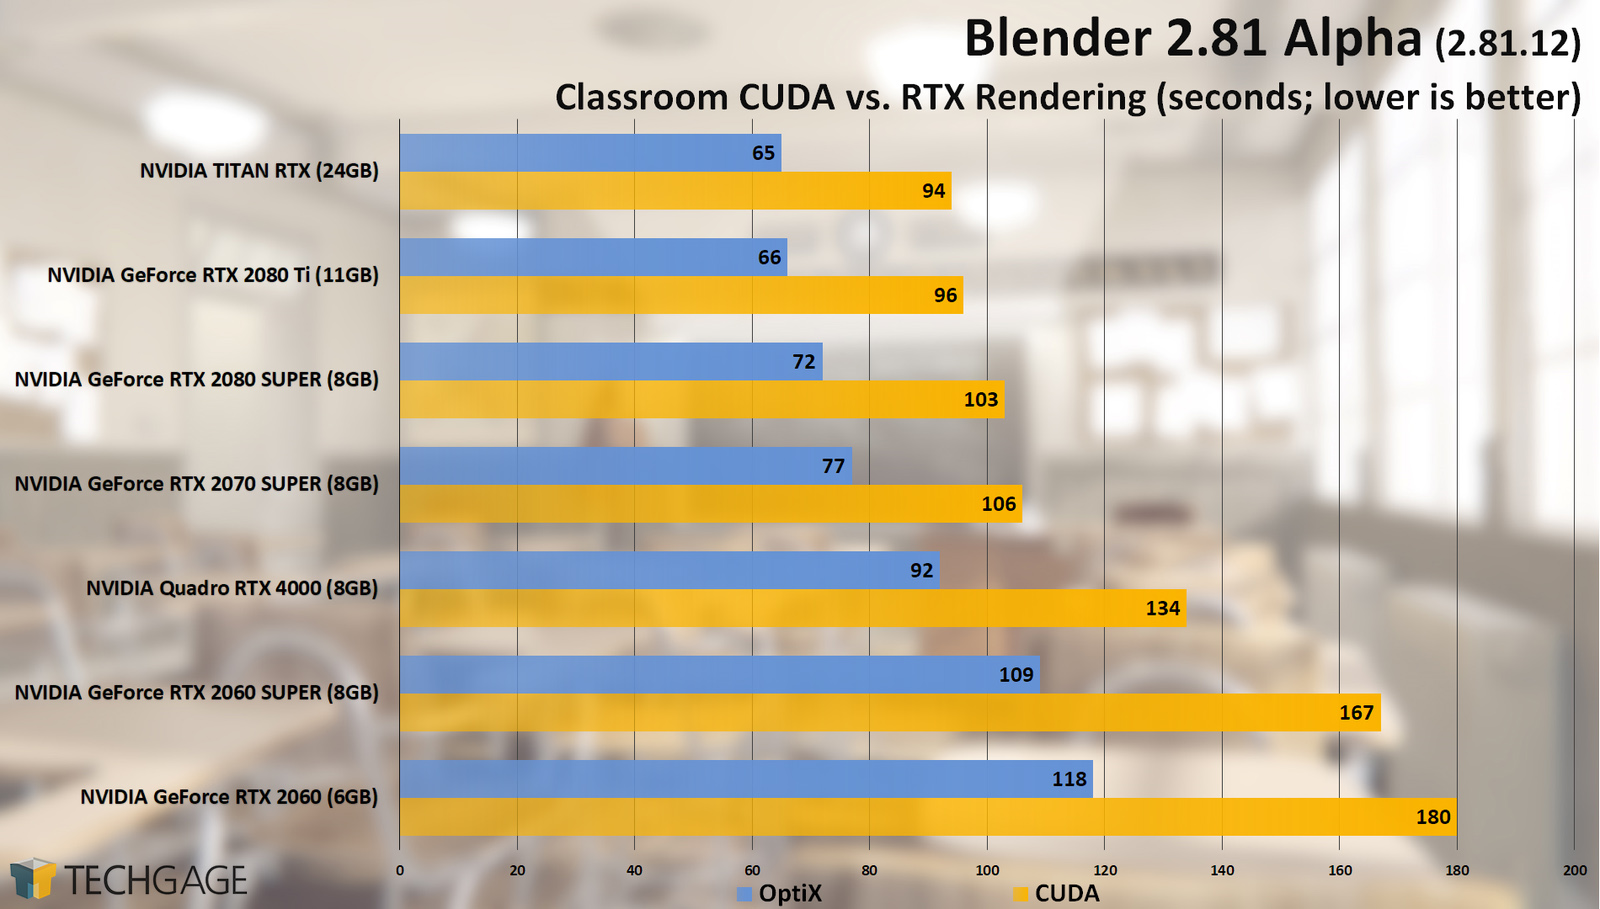 Blender-2.81-Alpha-GPU-Tests-Classroom-CUDA-vs-OptiX.jpg